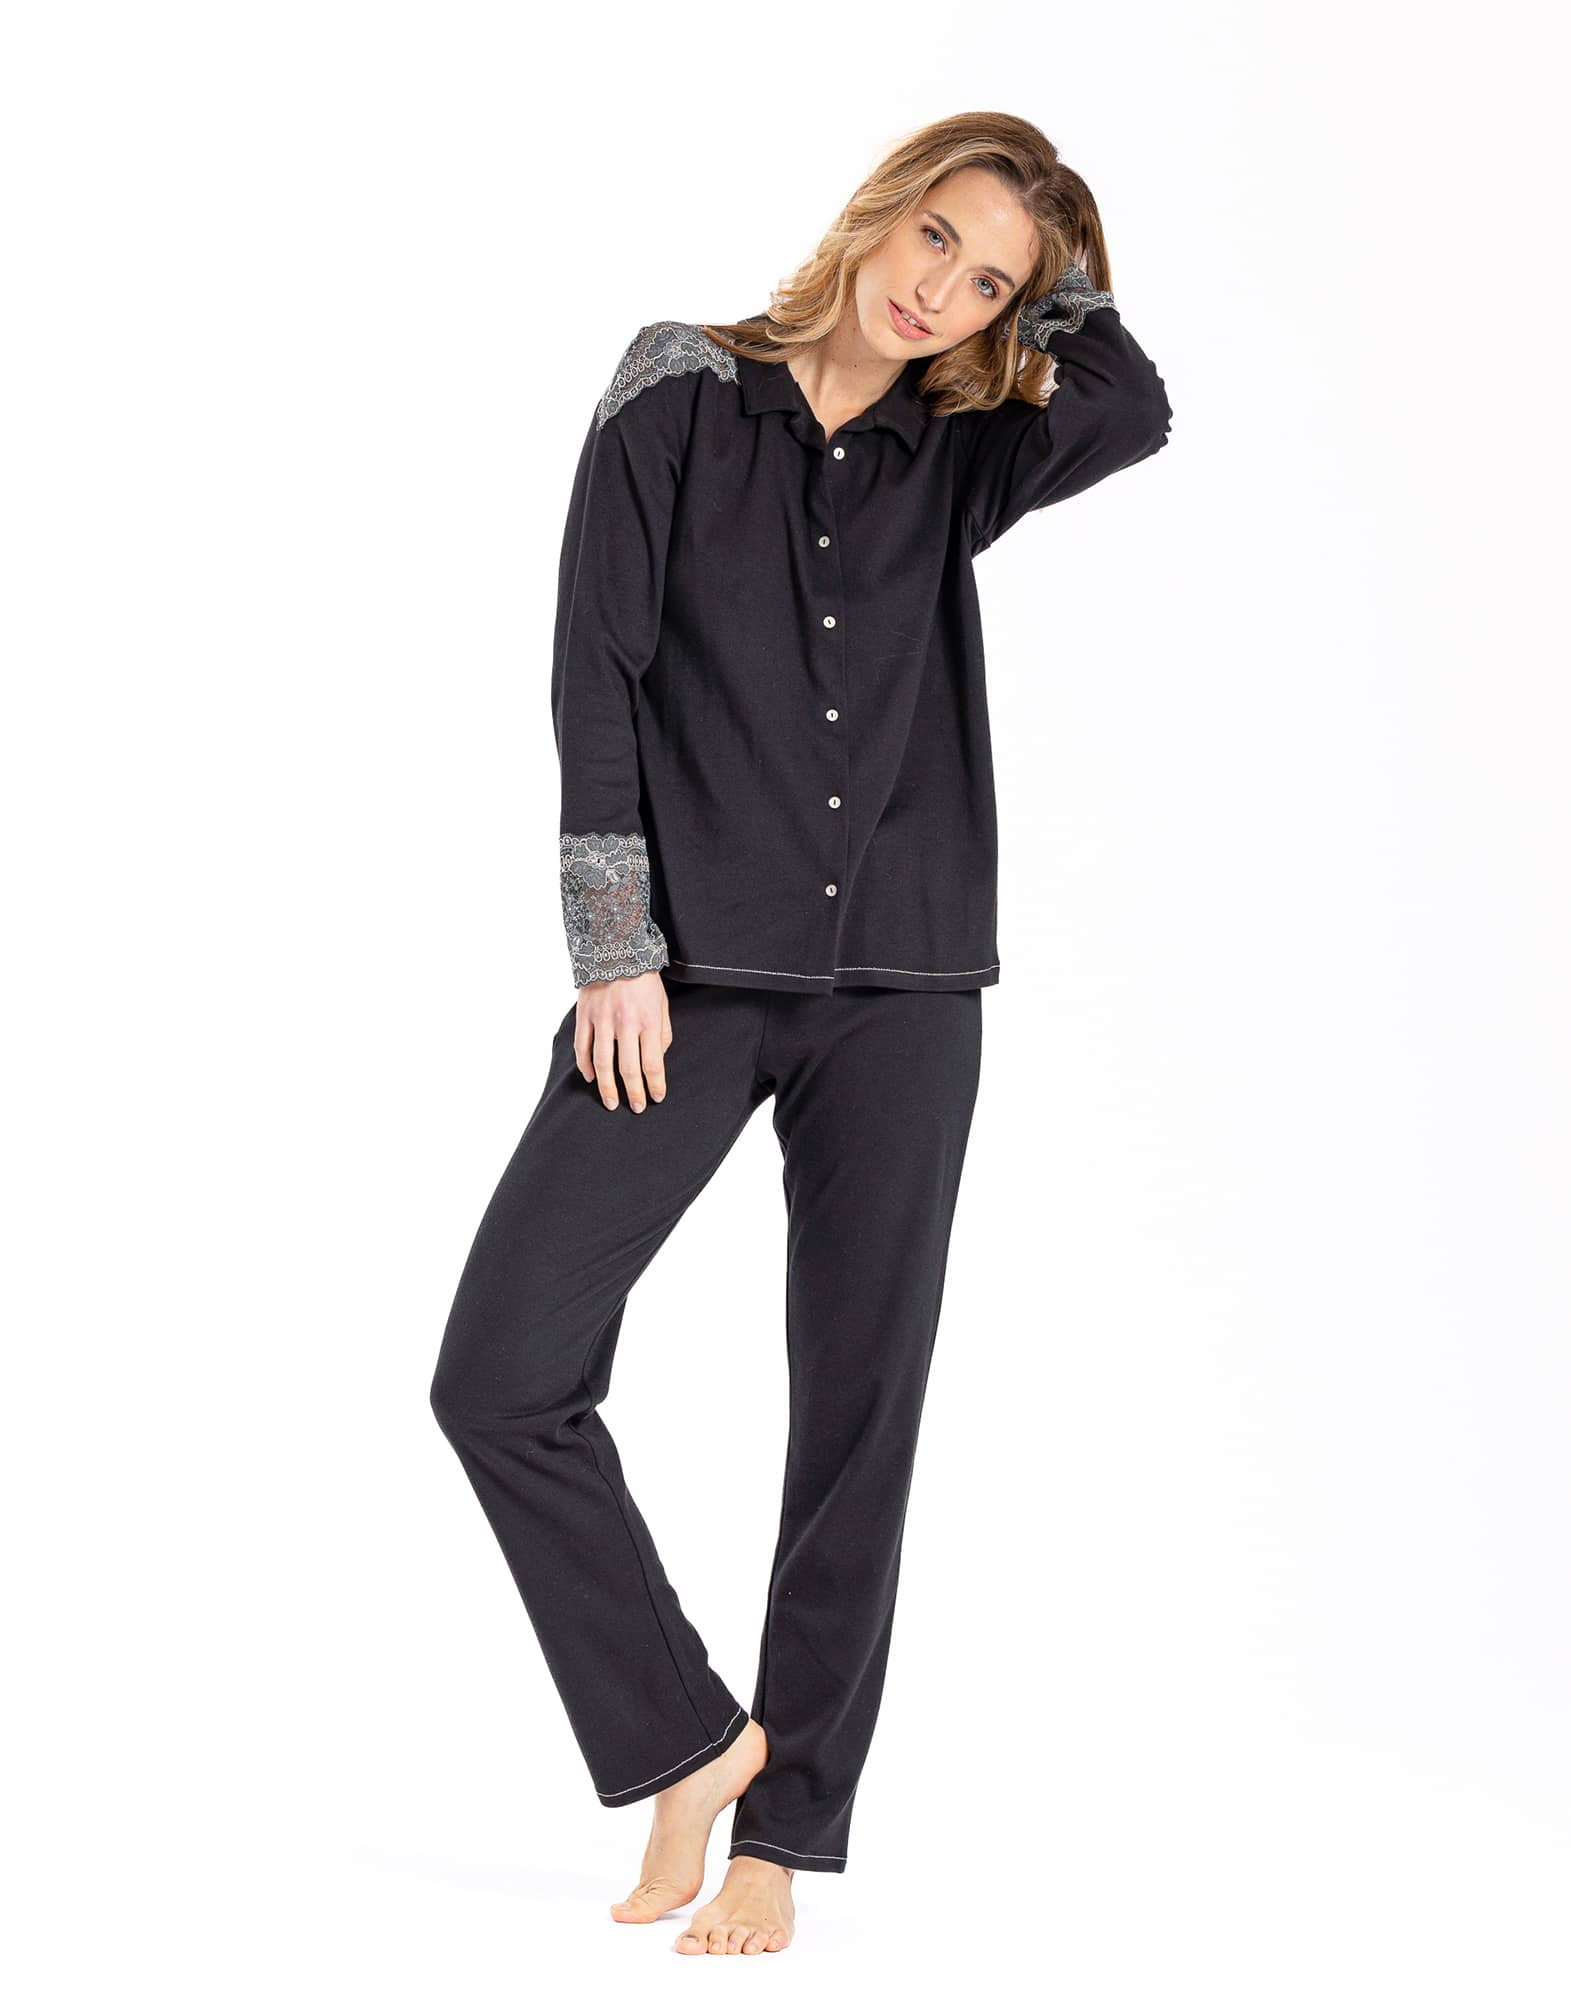 Buttoned pyjamas RITZ 606 100% cotton black